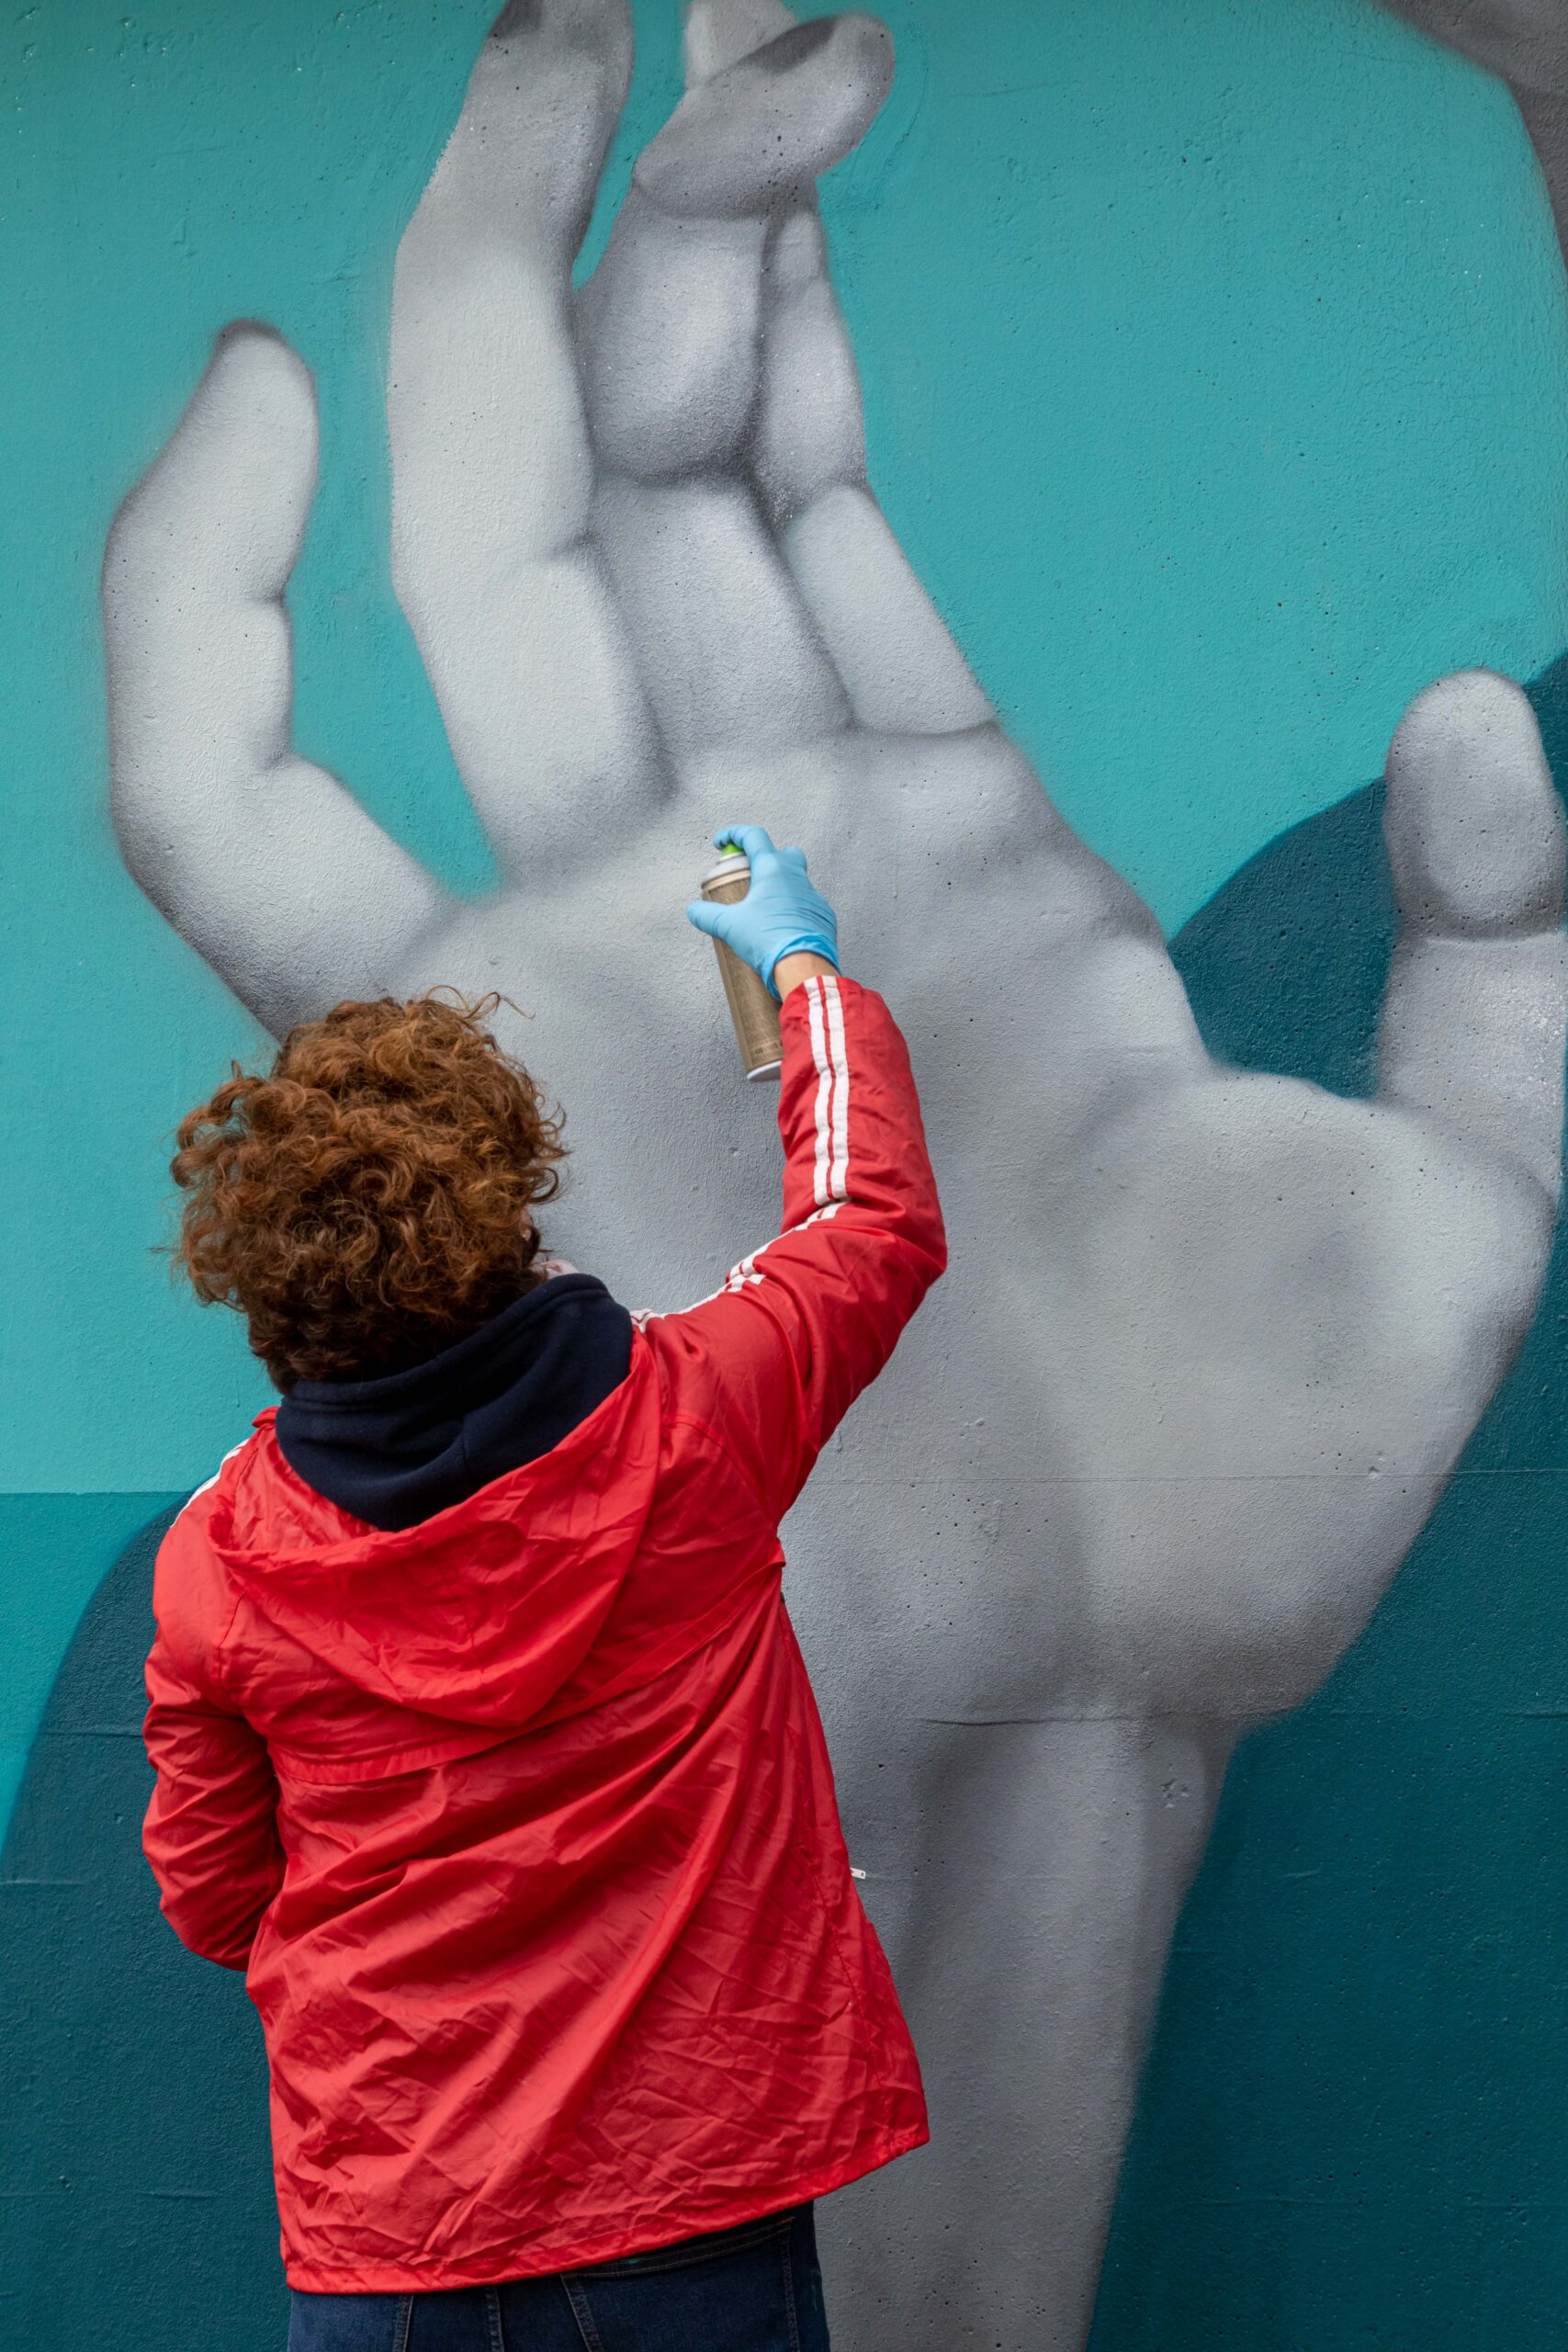 UrbanKofa painting the hands - Photo: Massimiliano Frau